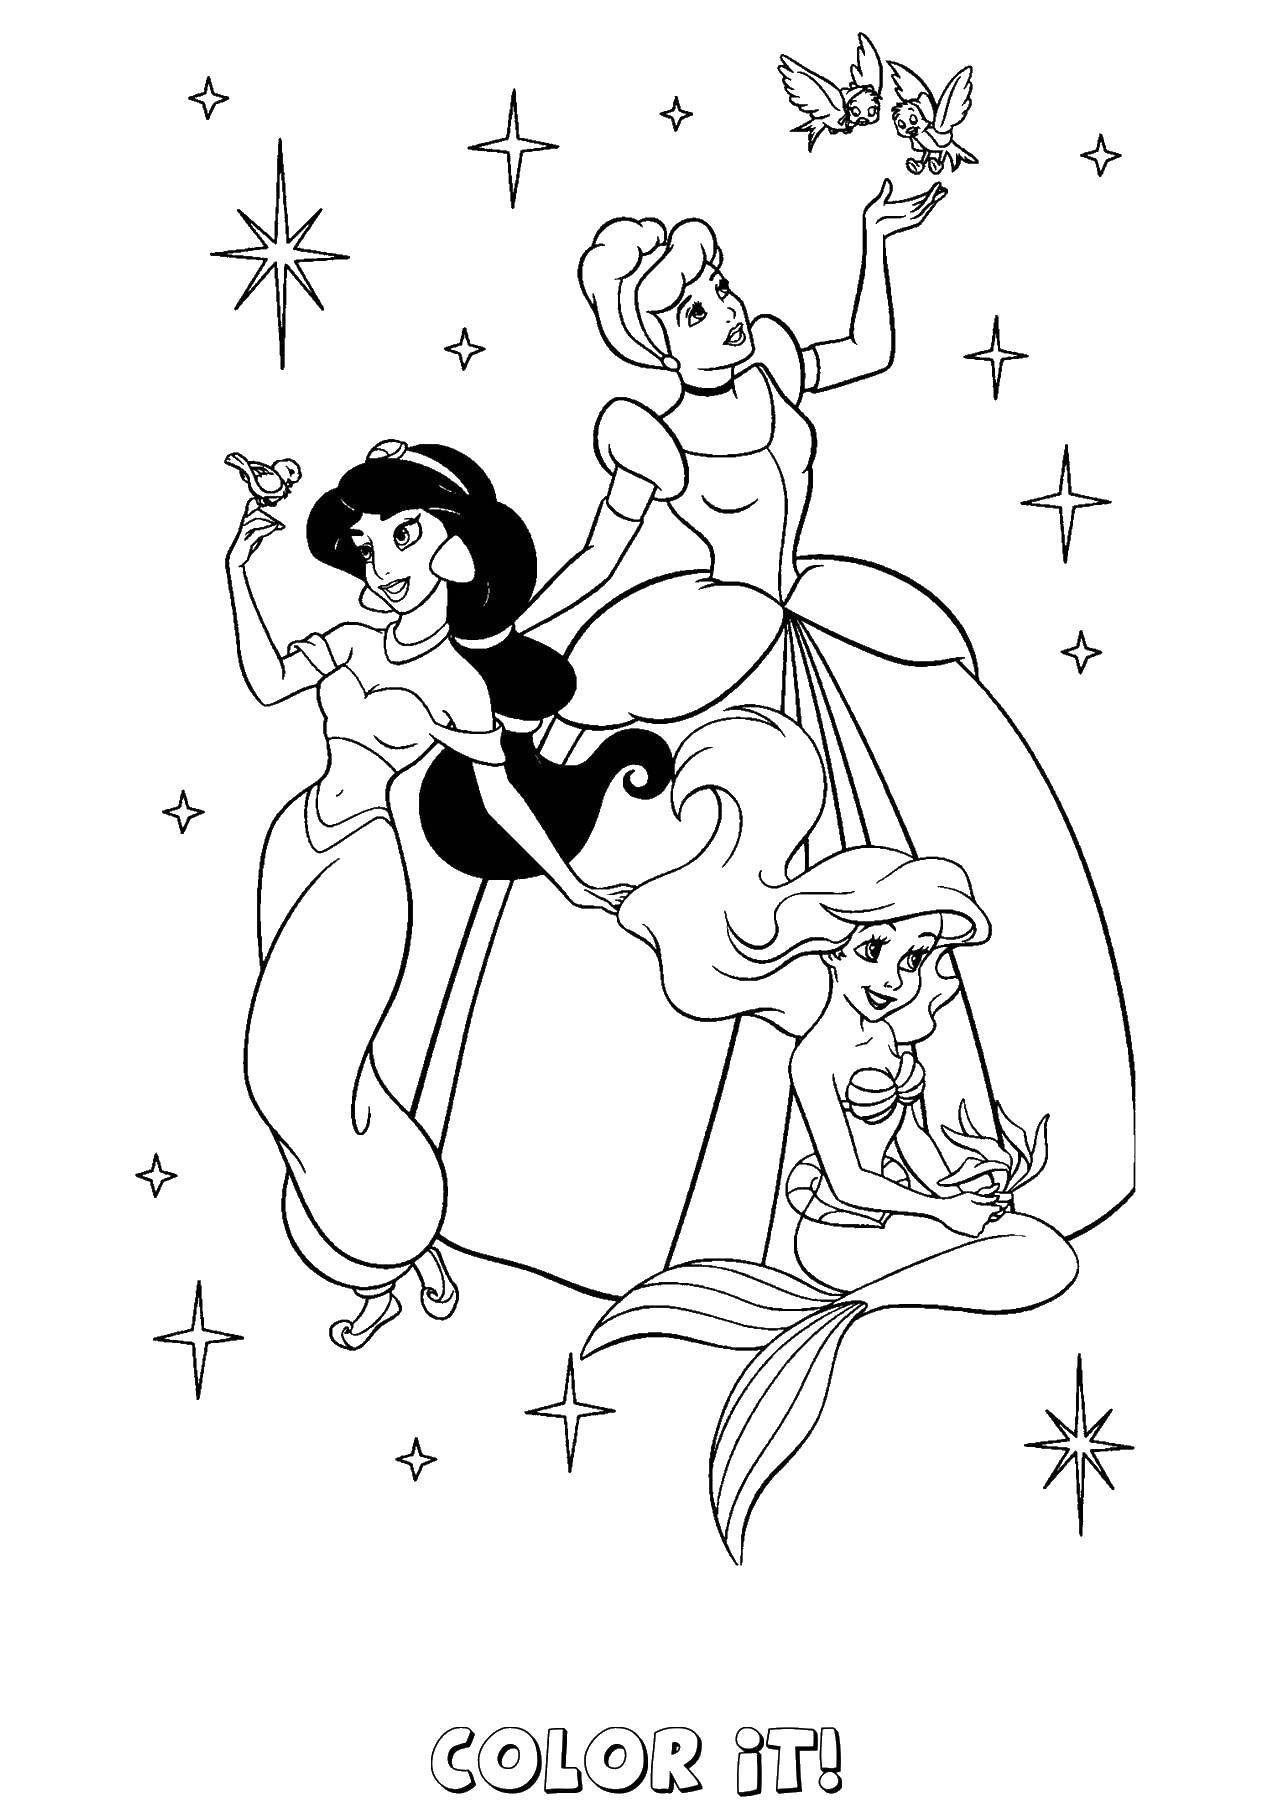 Coloring Jasmine, Ariel and Cinderella. Category Princess. Tags:  Disney, Princess.